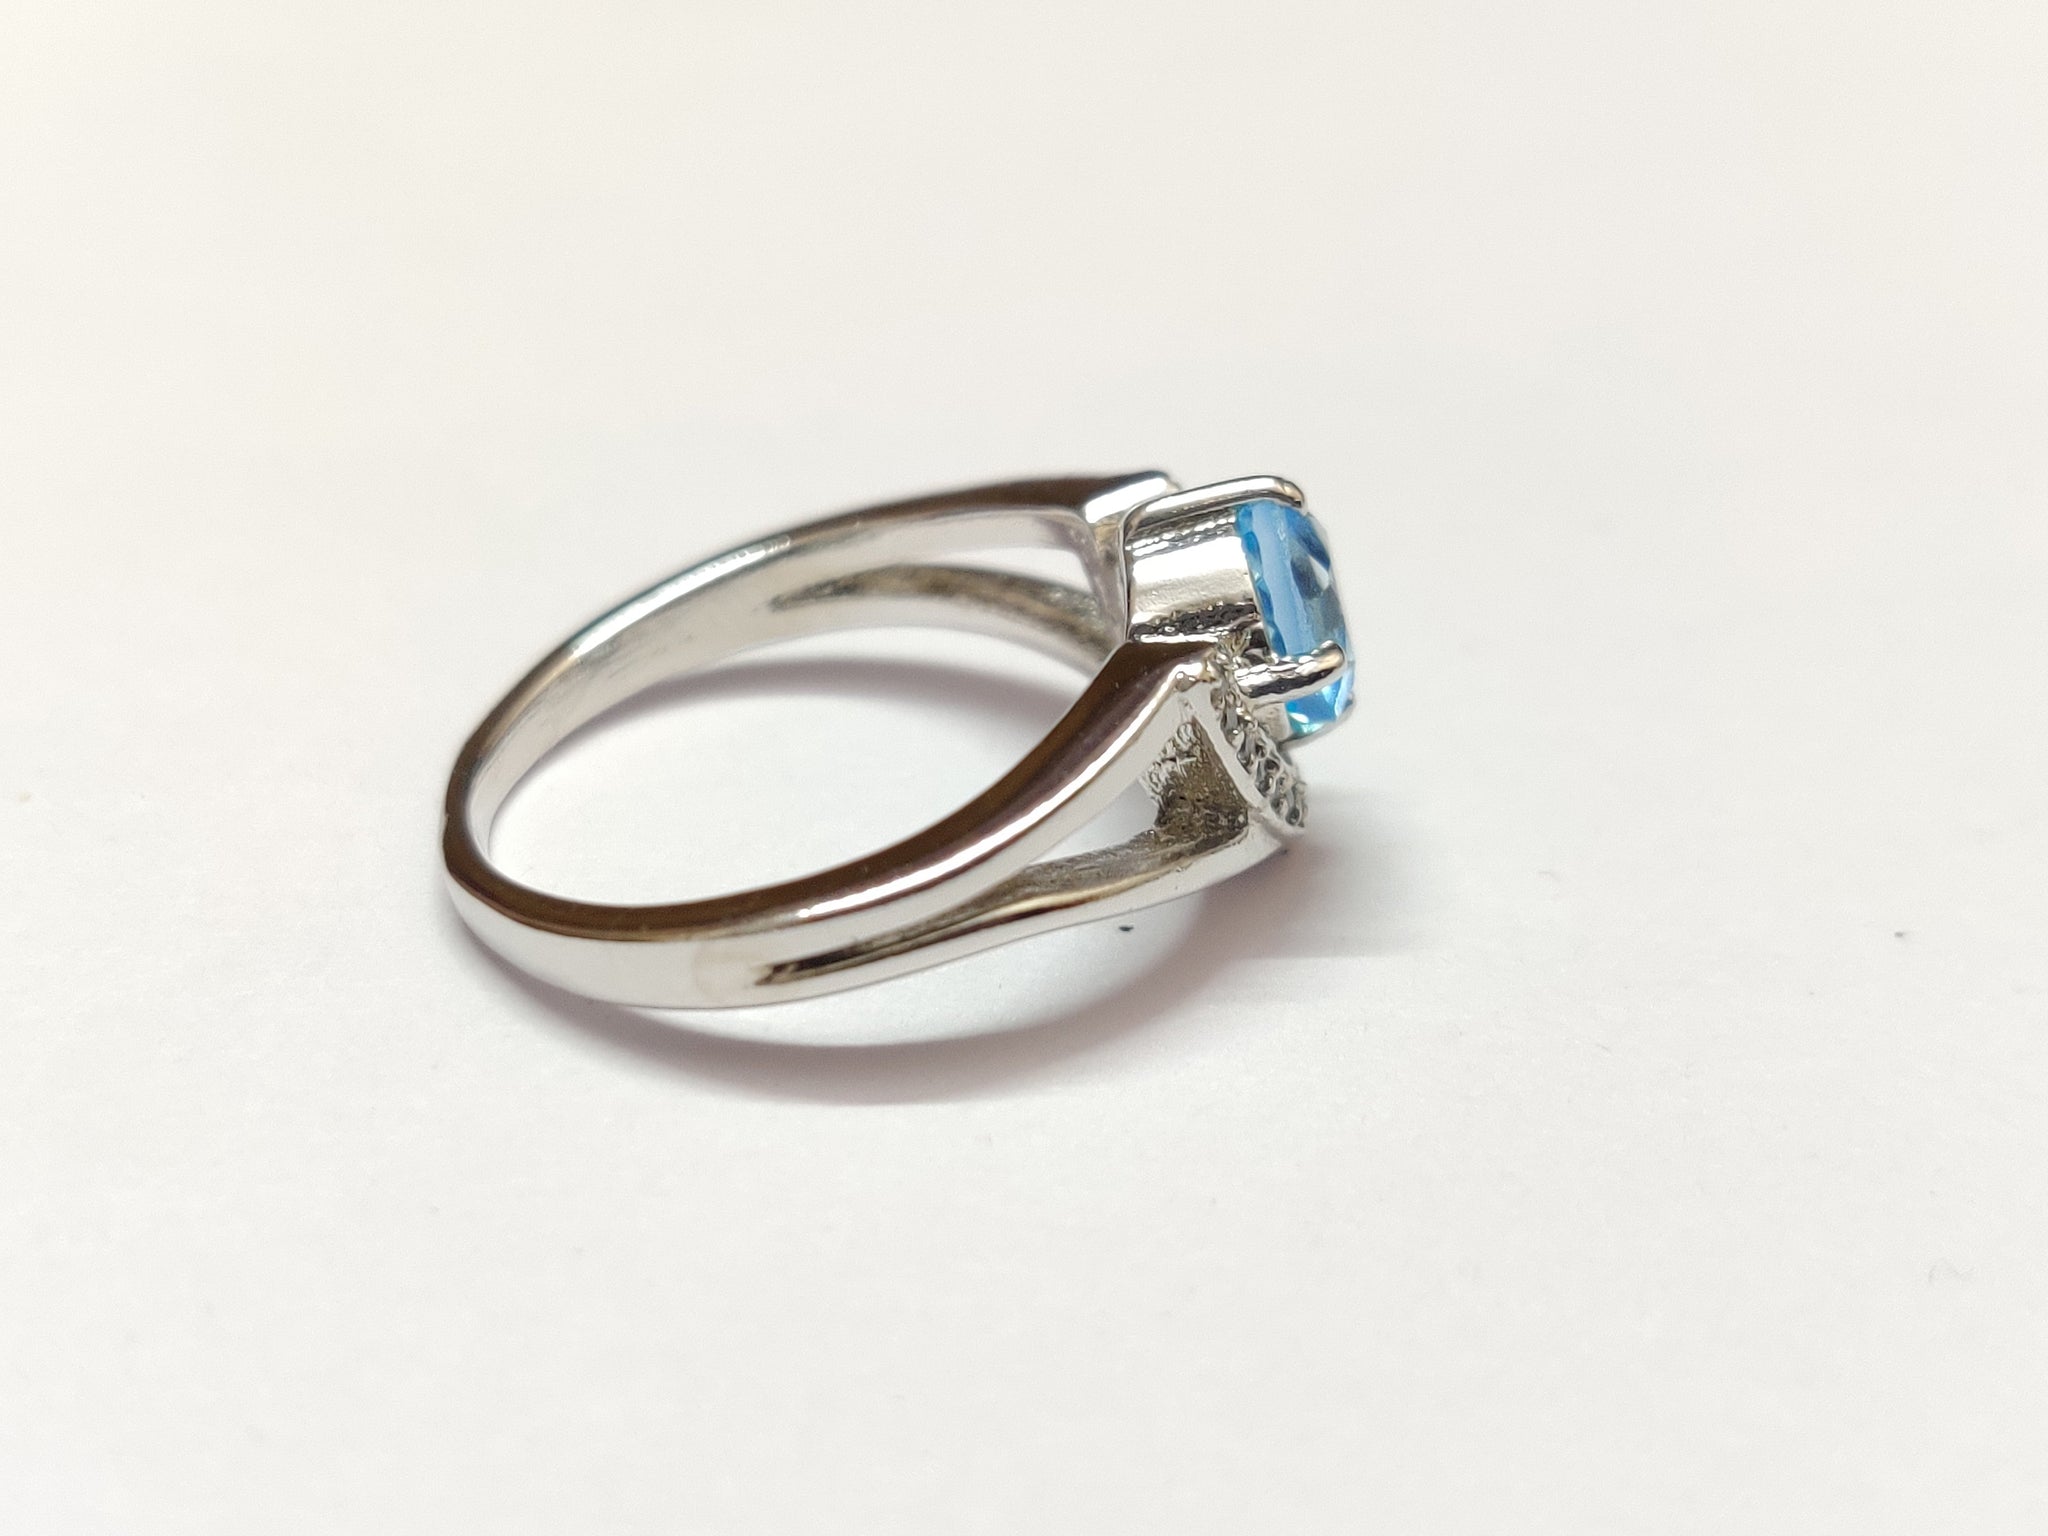 Swiss Blue Topaz Ring Silver Swiss Blue Topaz Engagement Ring 1.3 Ct Swiss Topaz Men Ring Natural Swiss Blue Topaz Promise Ring Birthstone